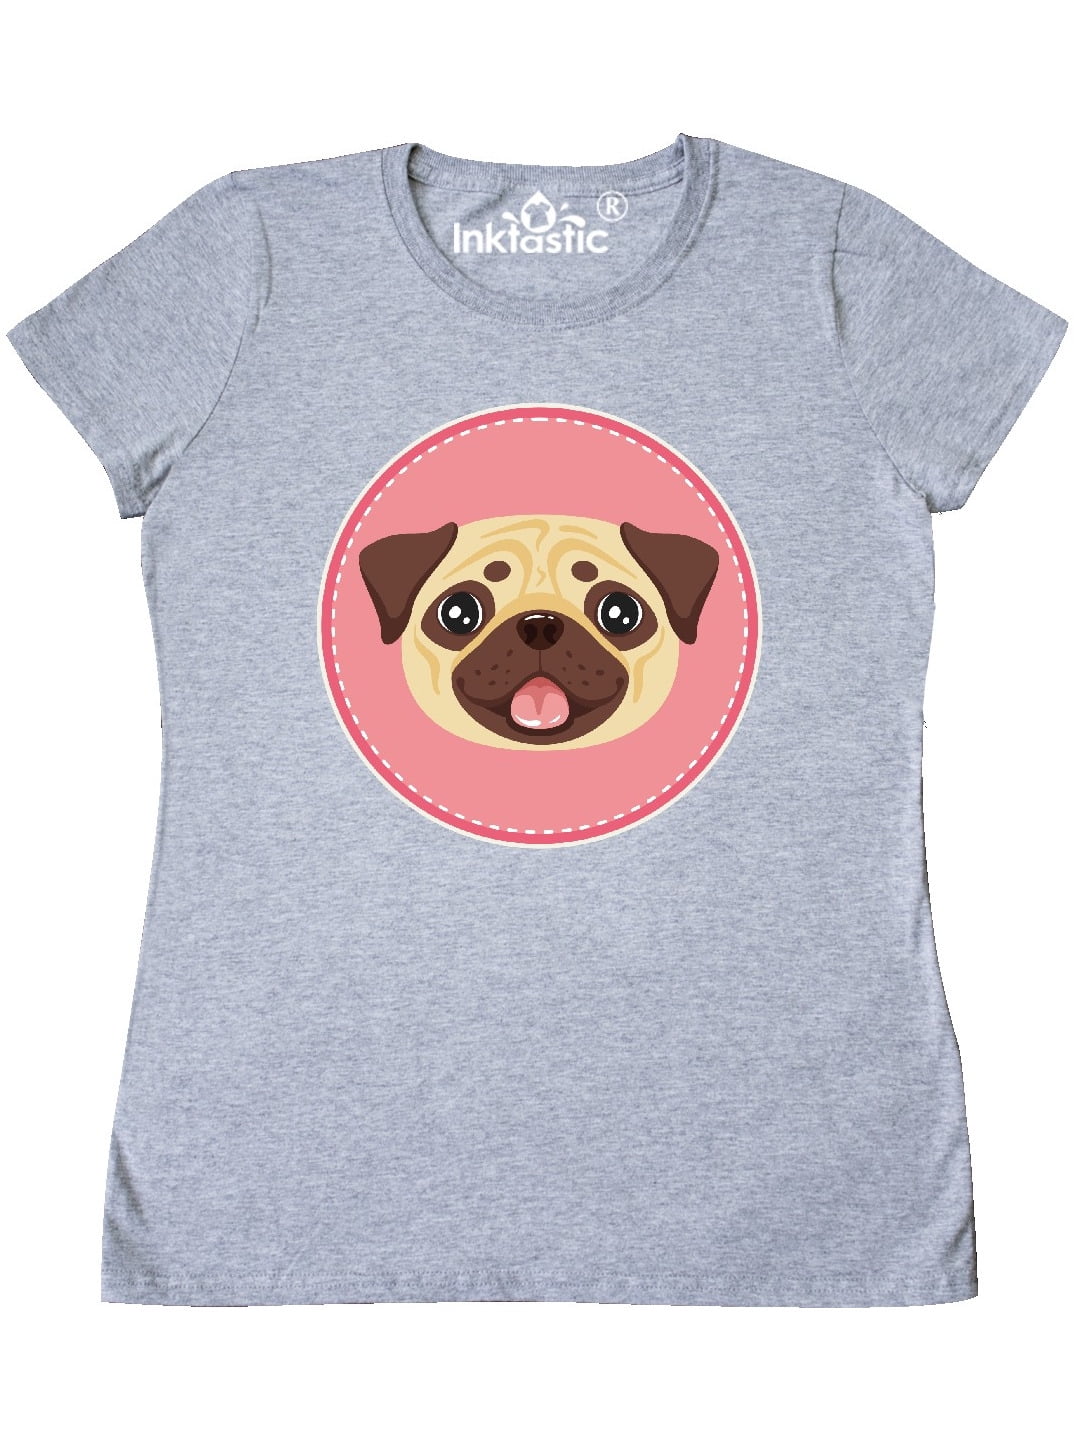 Pug Shirt For Women Girls Kids Toddler Gift Just A Girl Who Loves Pugs T-shirt